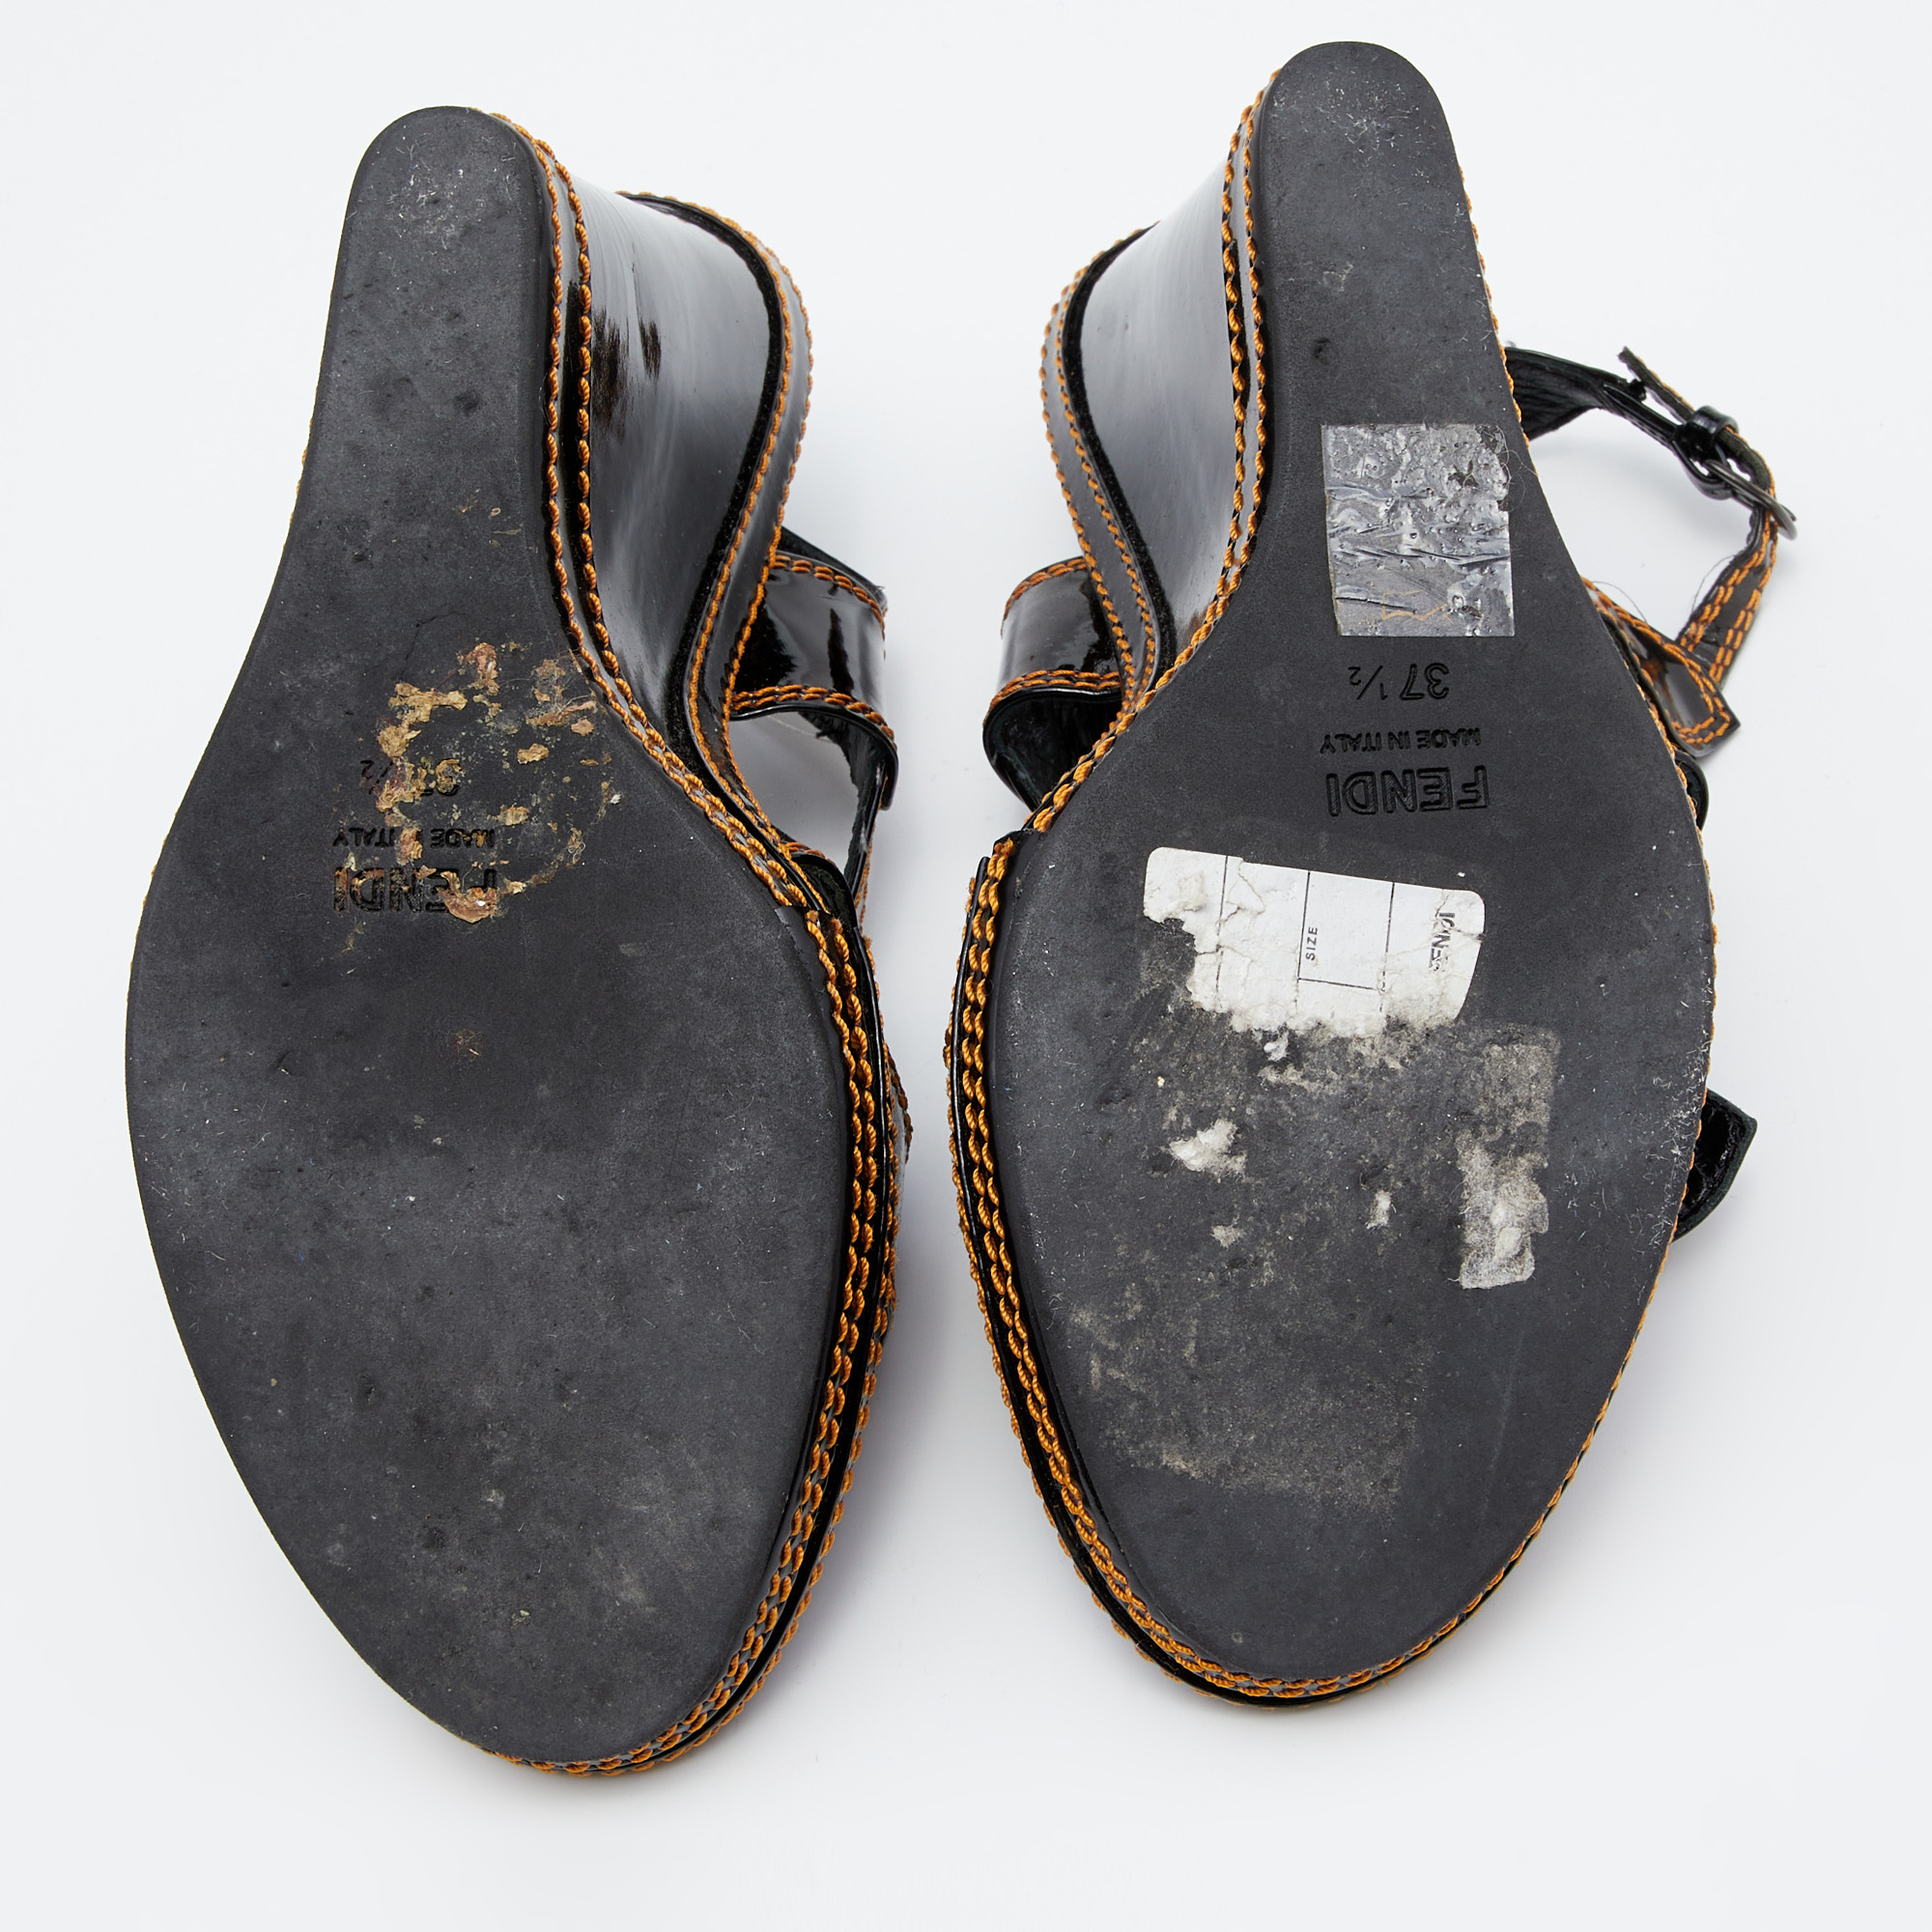 Fendi Black Patent Leather B Buckle Platform Wedge Sandals Size 37.5